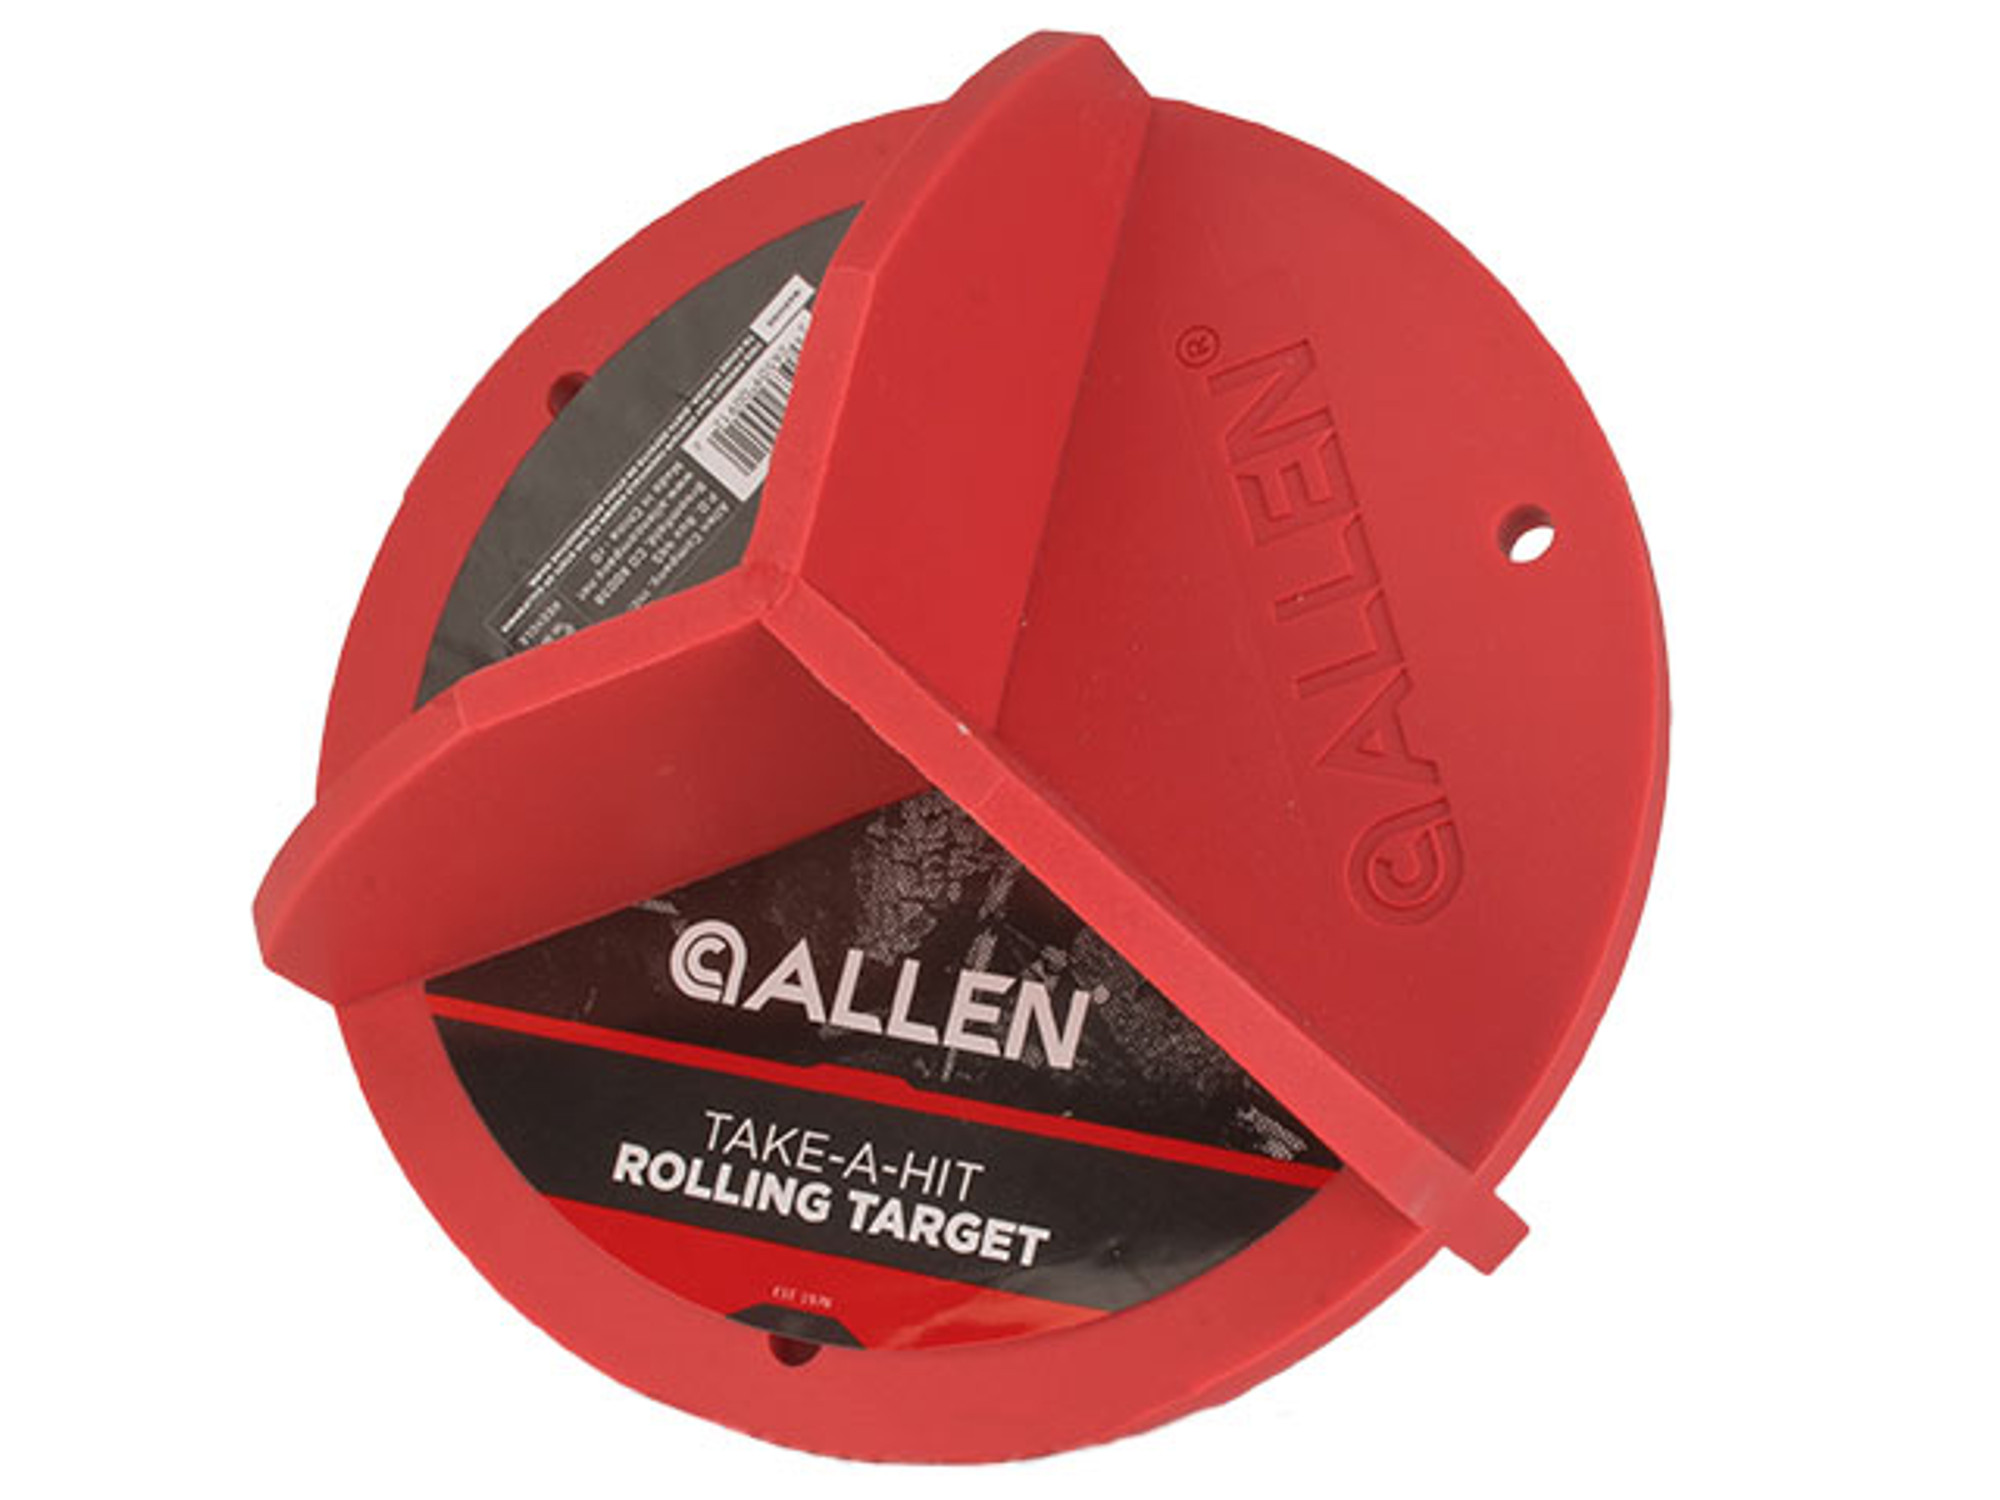 Allen Company Holey Roler Take-A-Hit Target - Medium